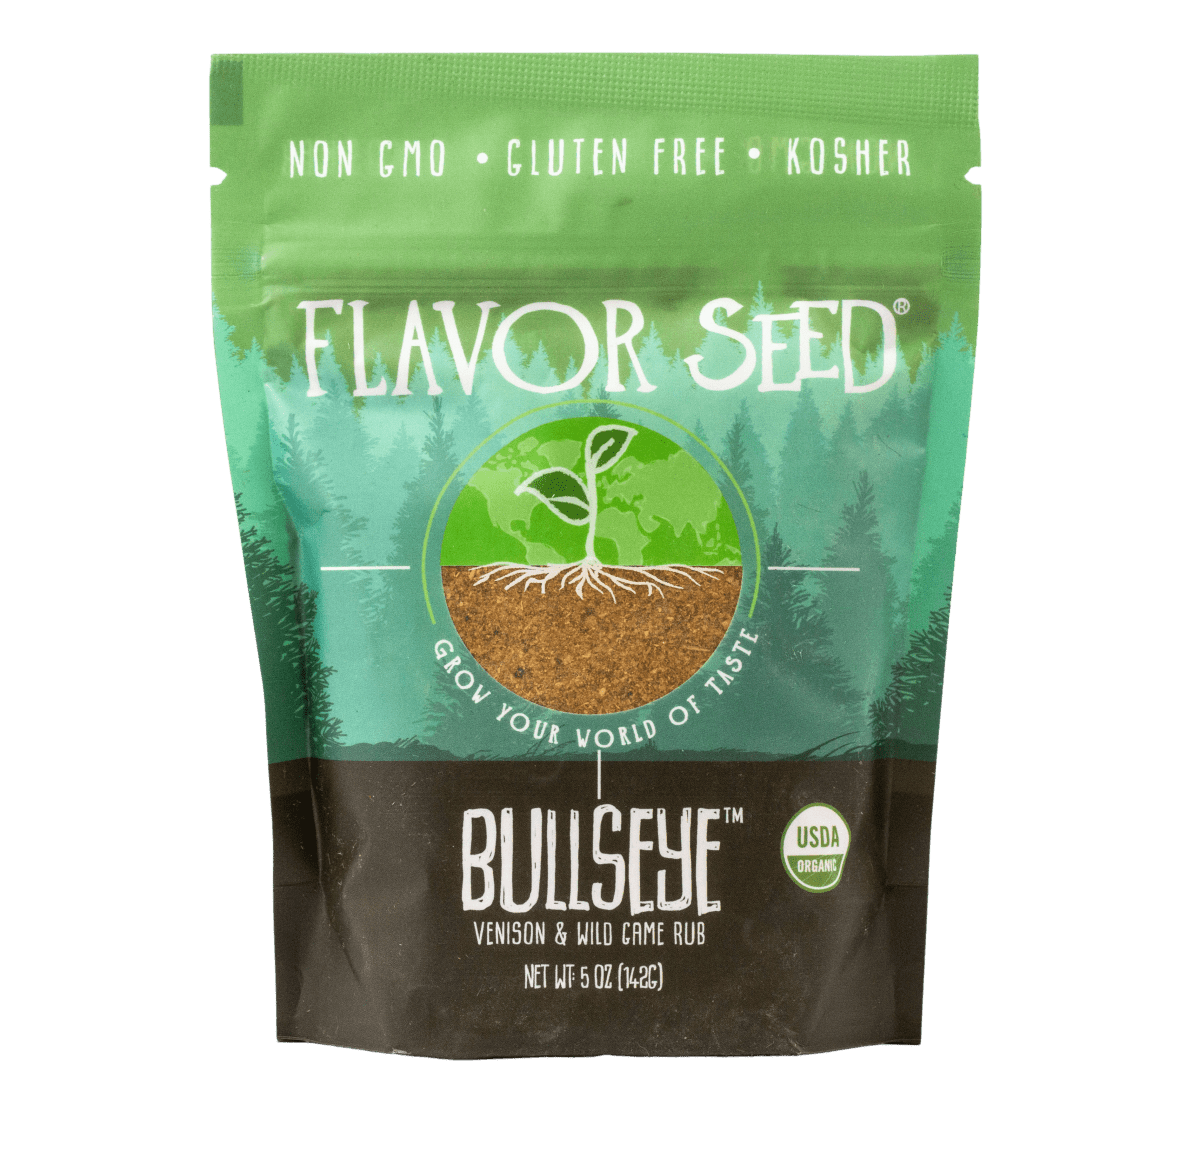 FLAVOR SEED - Bullseye Organic Venison and Wild Game Rub - Flavor Seed